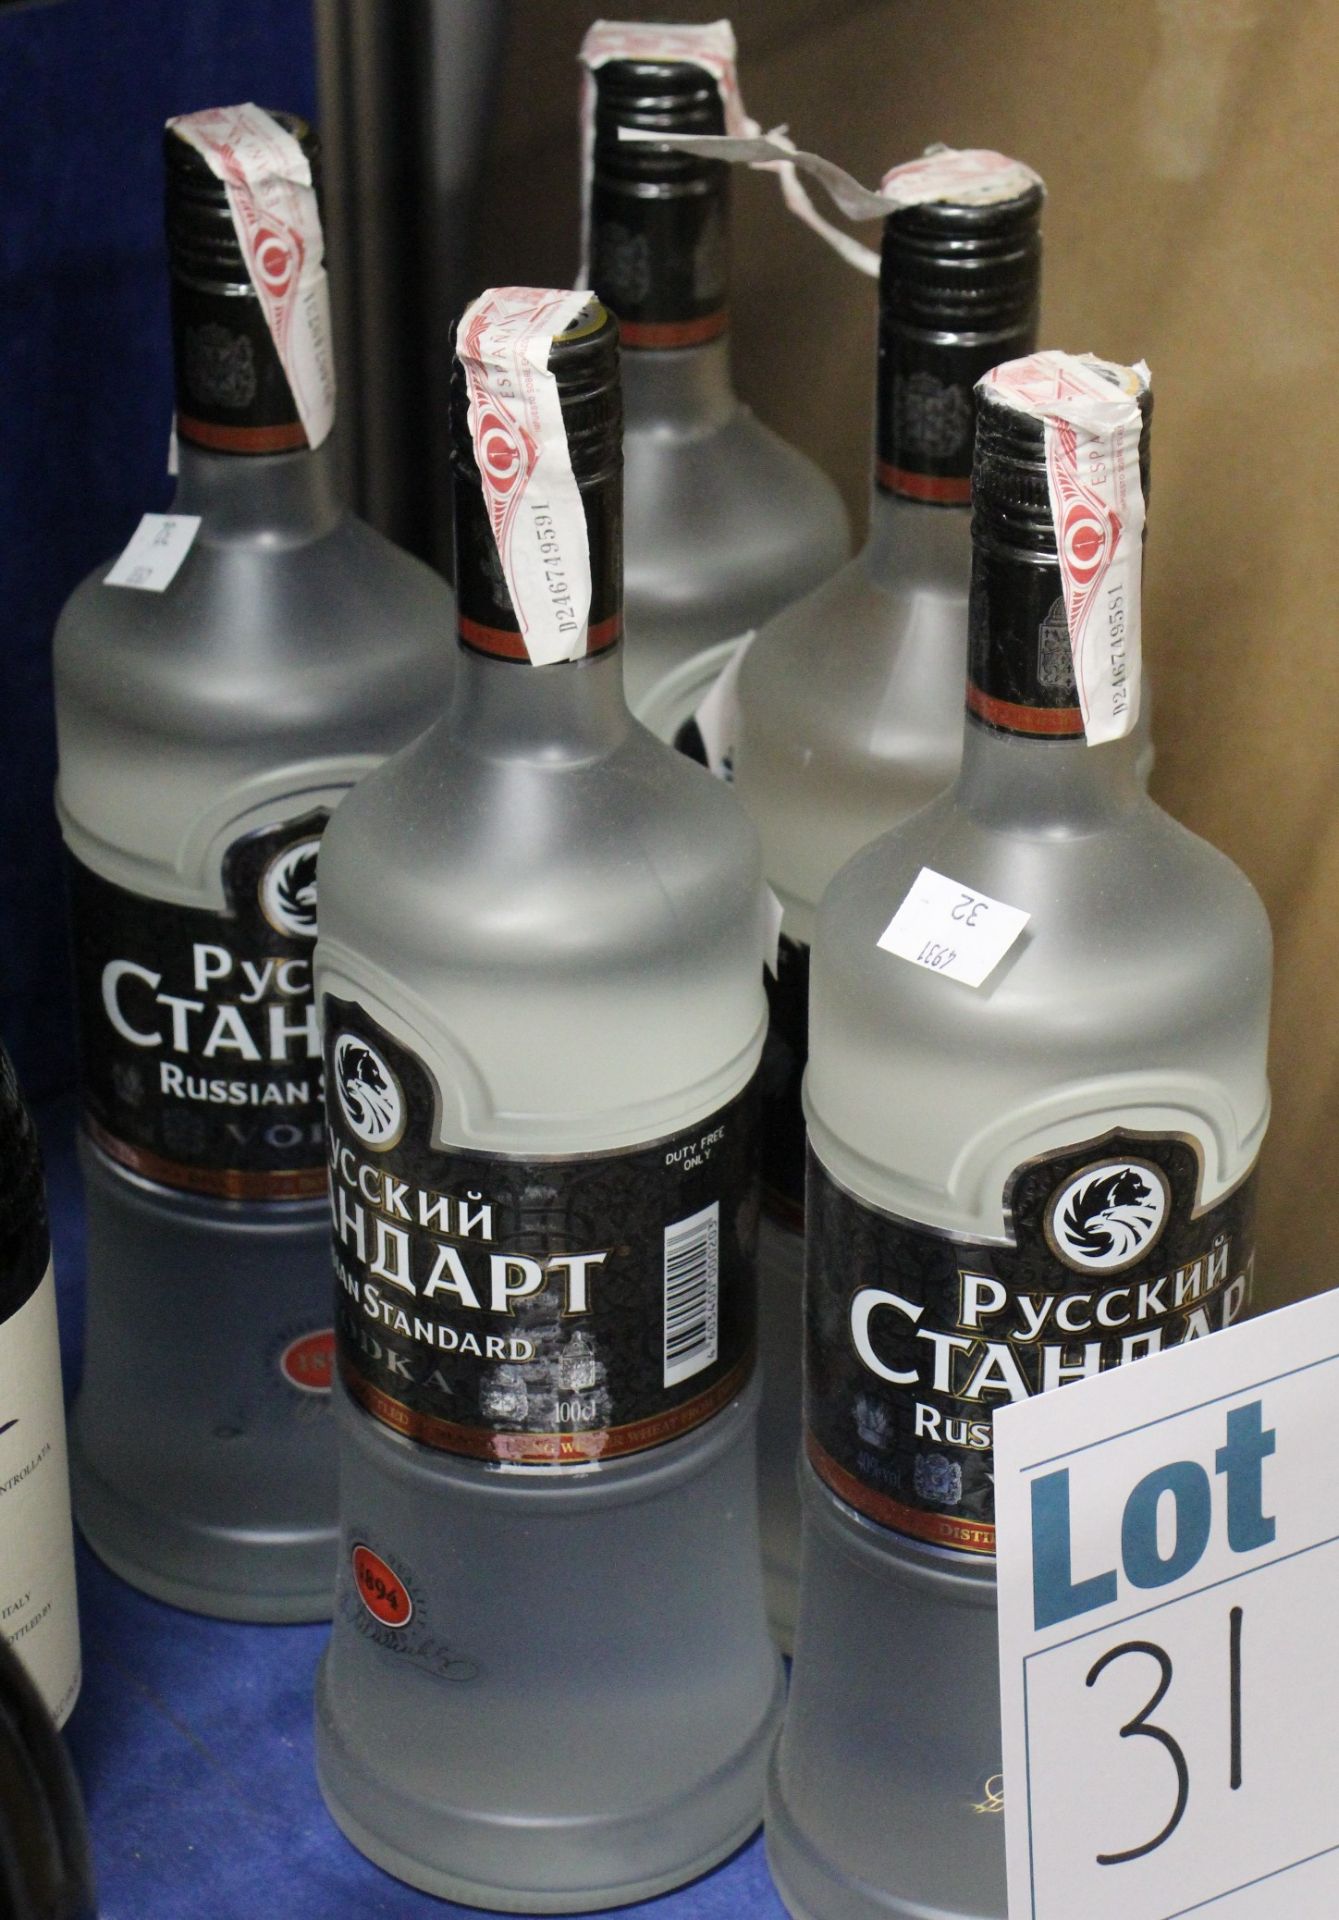 Five bottles of Ctahoap Russian standard vodka (5 x 1ltr) (Over 18's only).